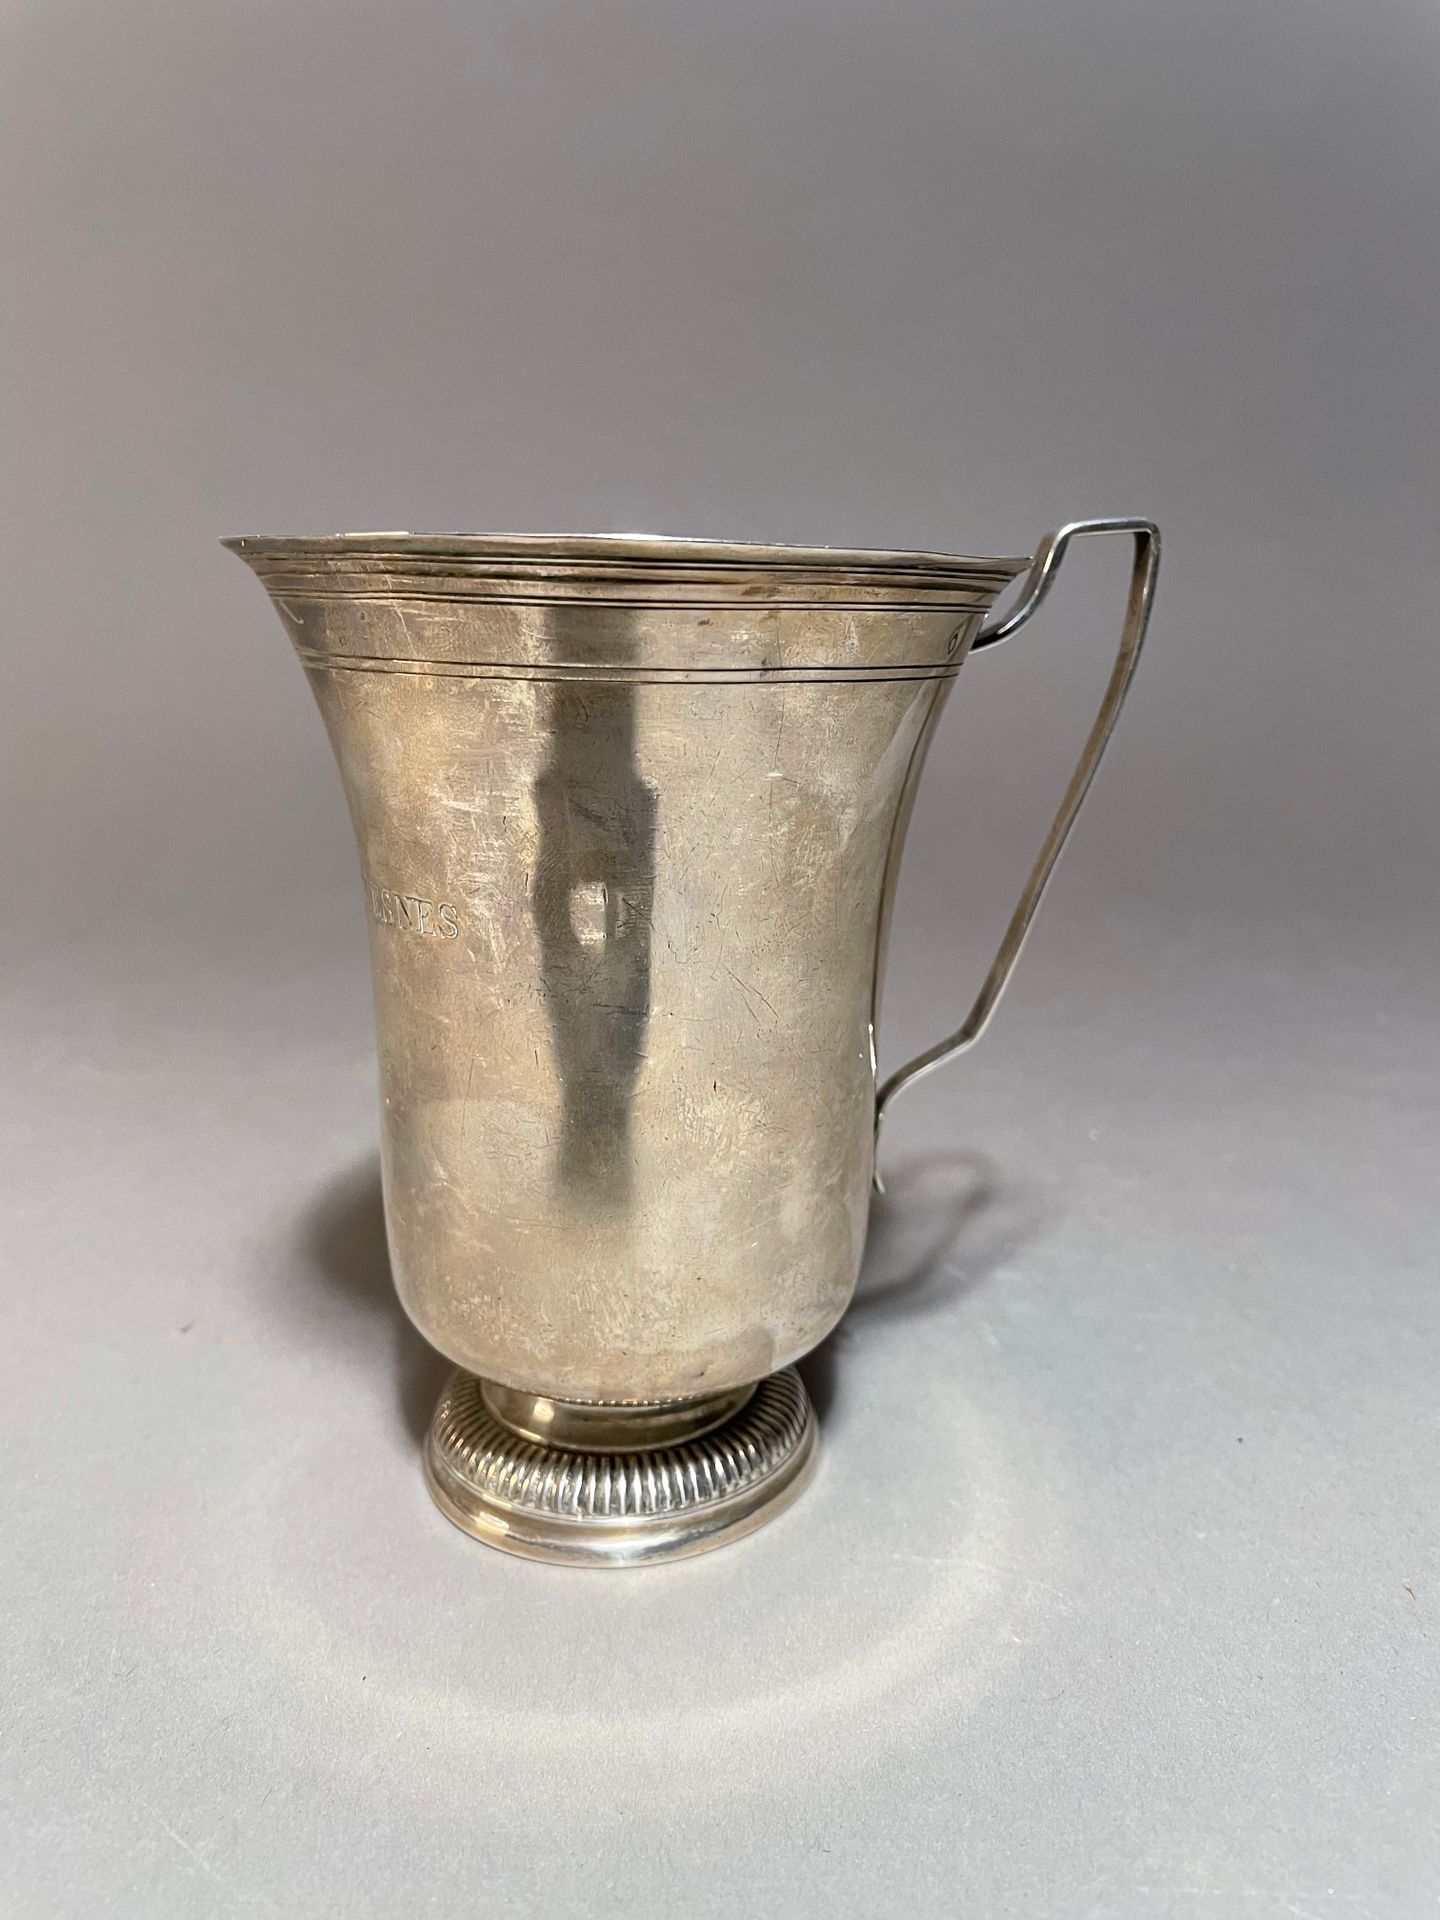 Null 郁金香形水壶
银制
18世纪
手柄相连，壶脚用锡焊接
PB : 219克